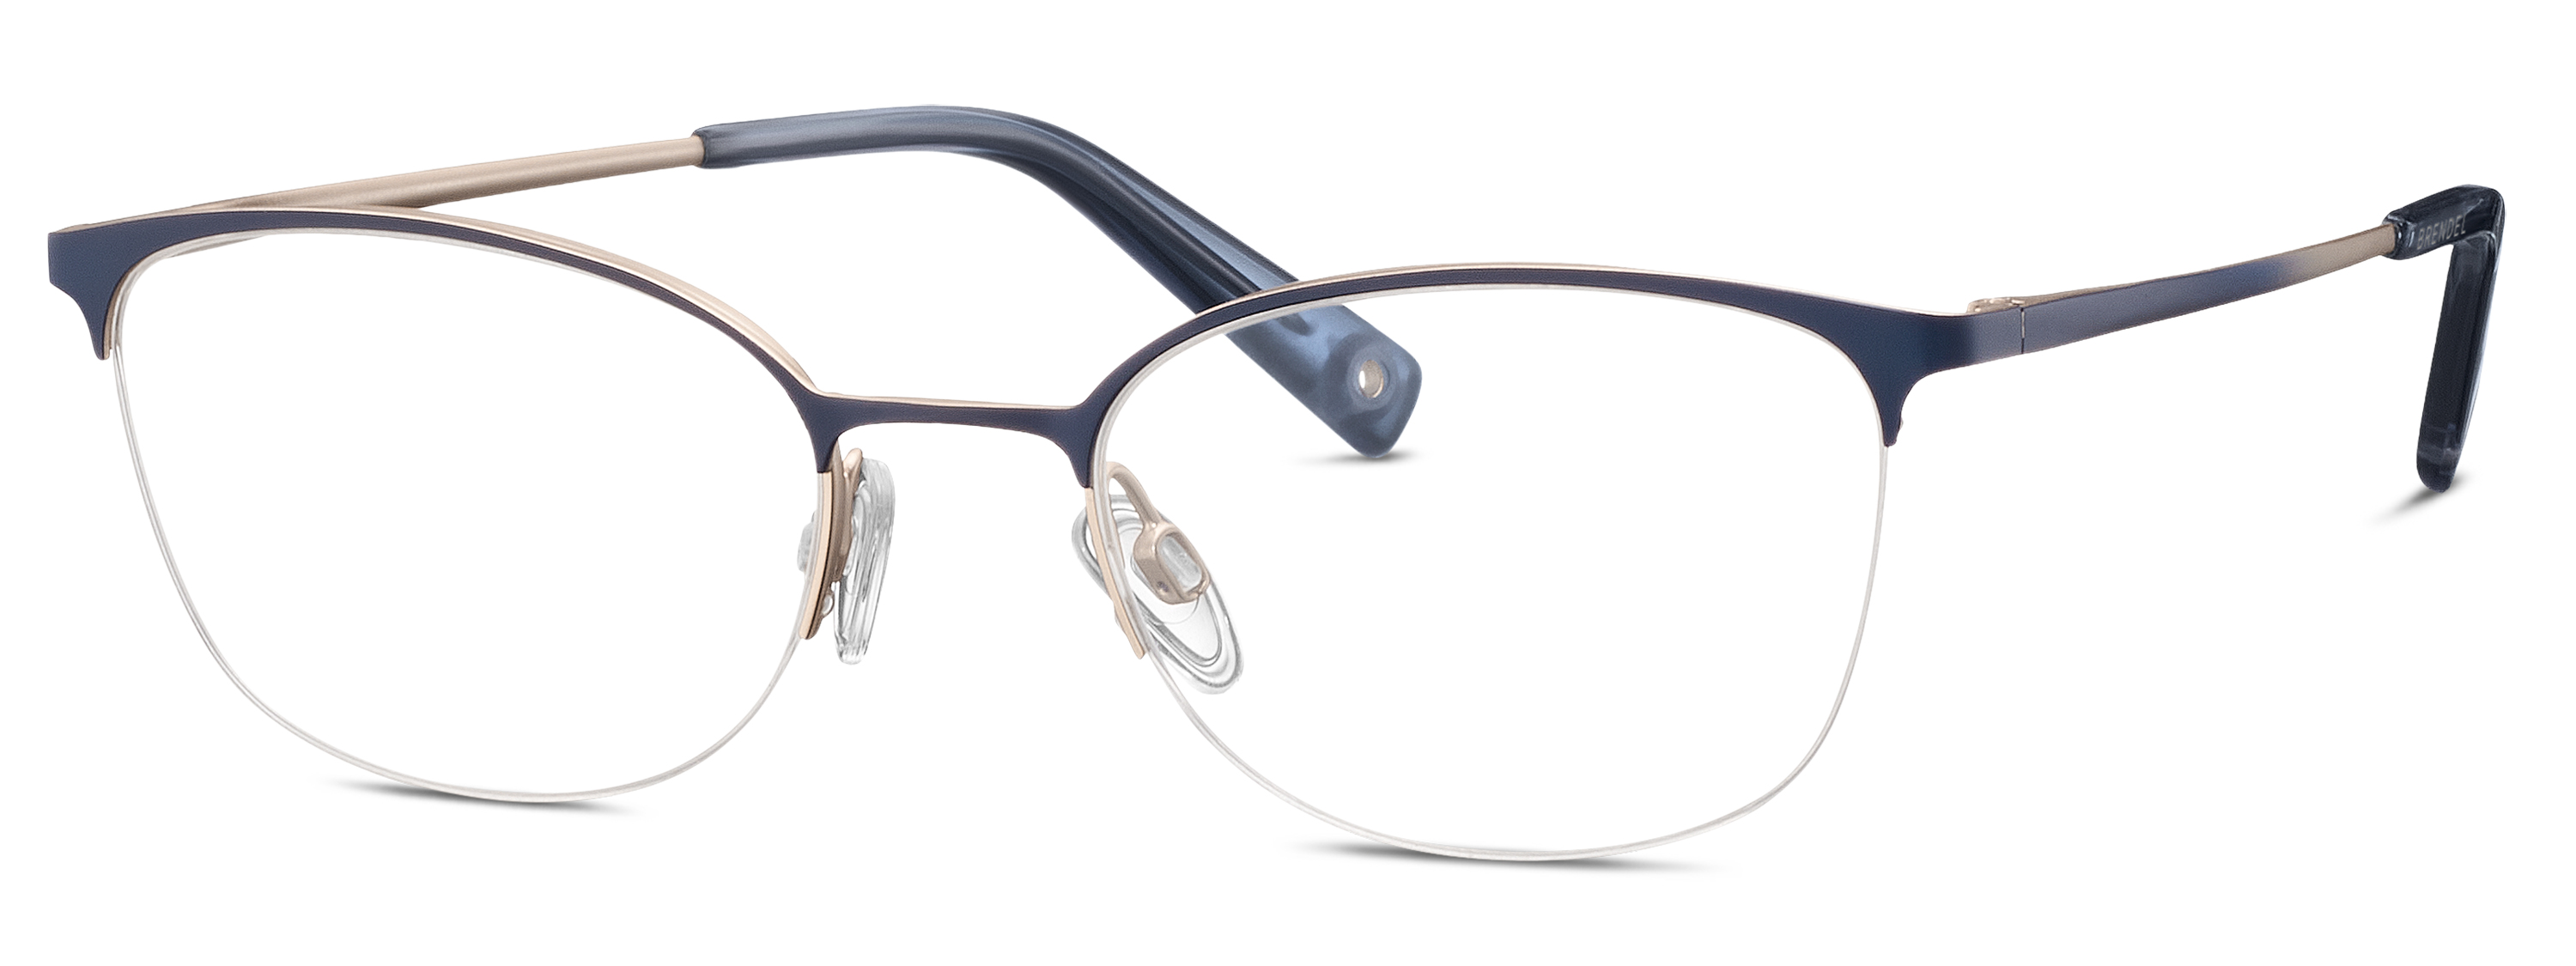 Front BRENDEL eyewear 902392 70 Brille Blau, Goldfarben